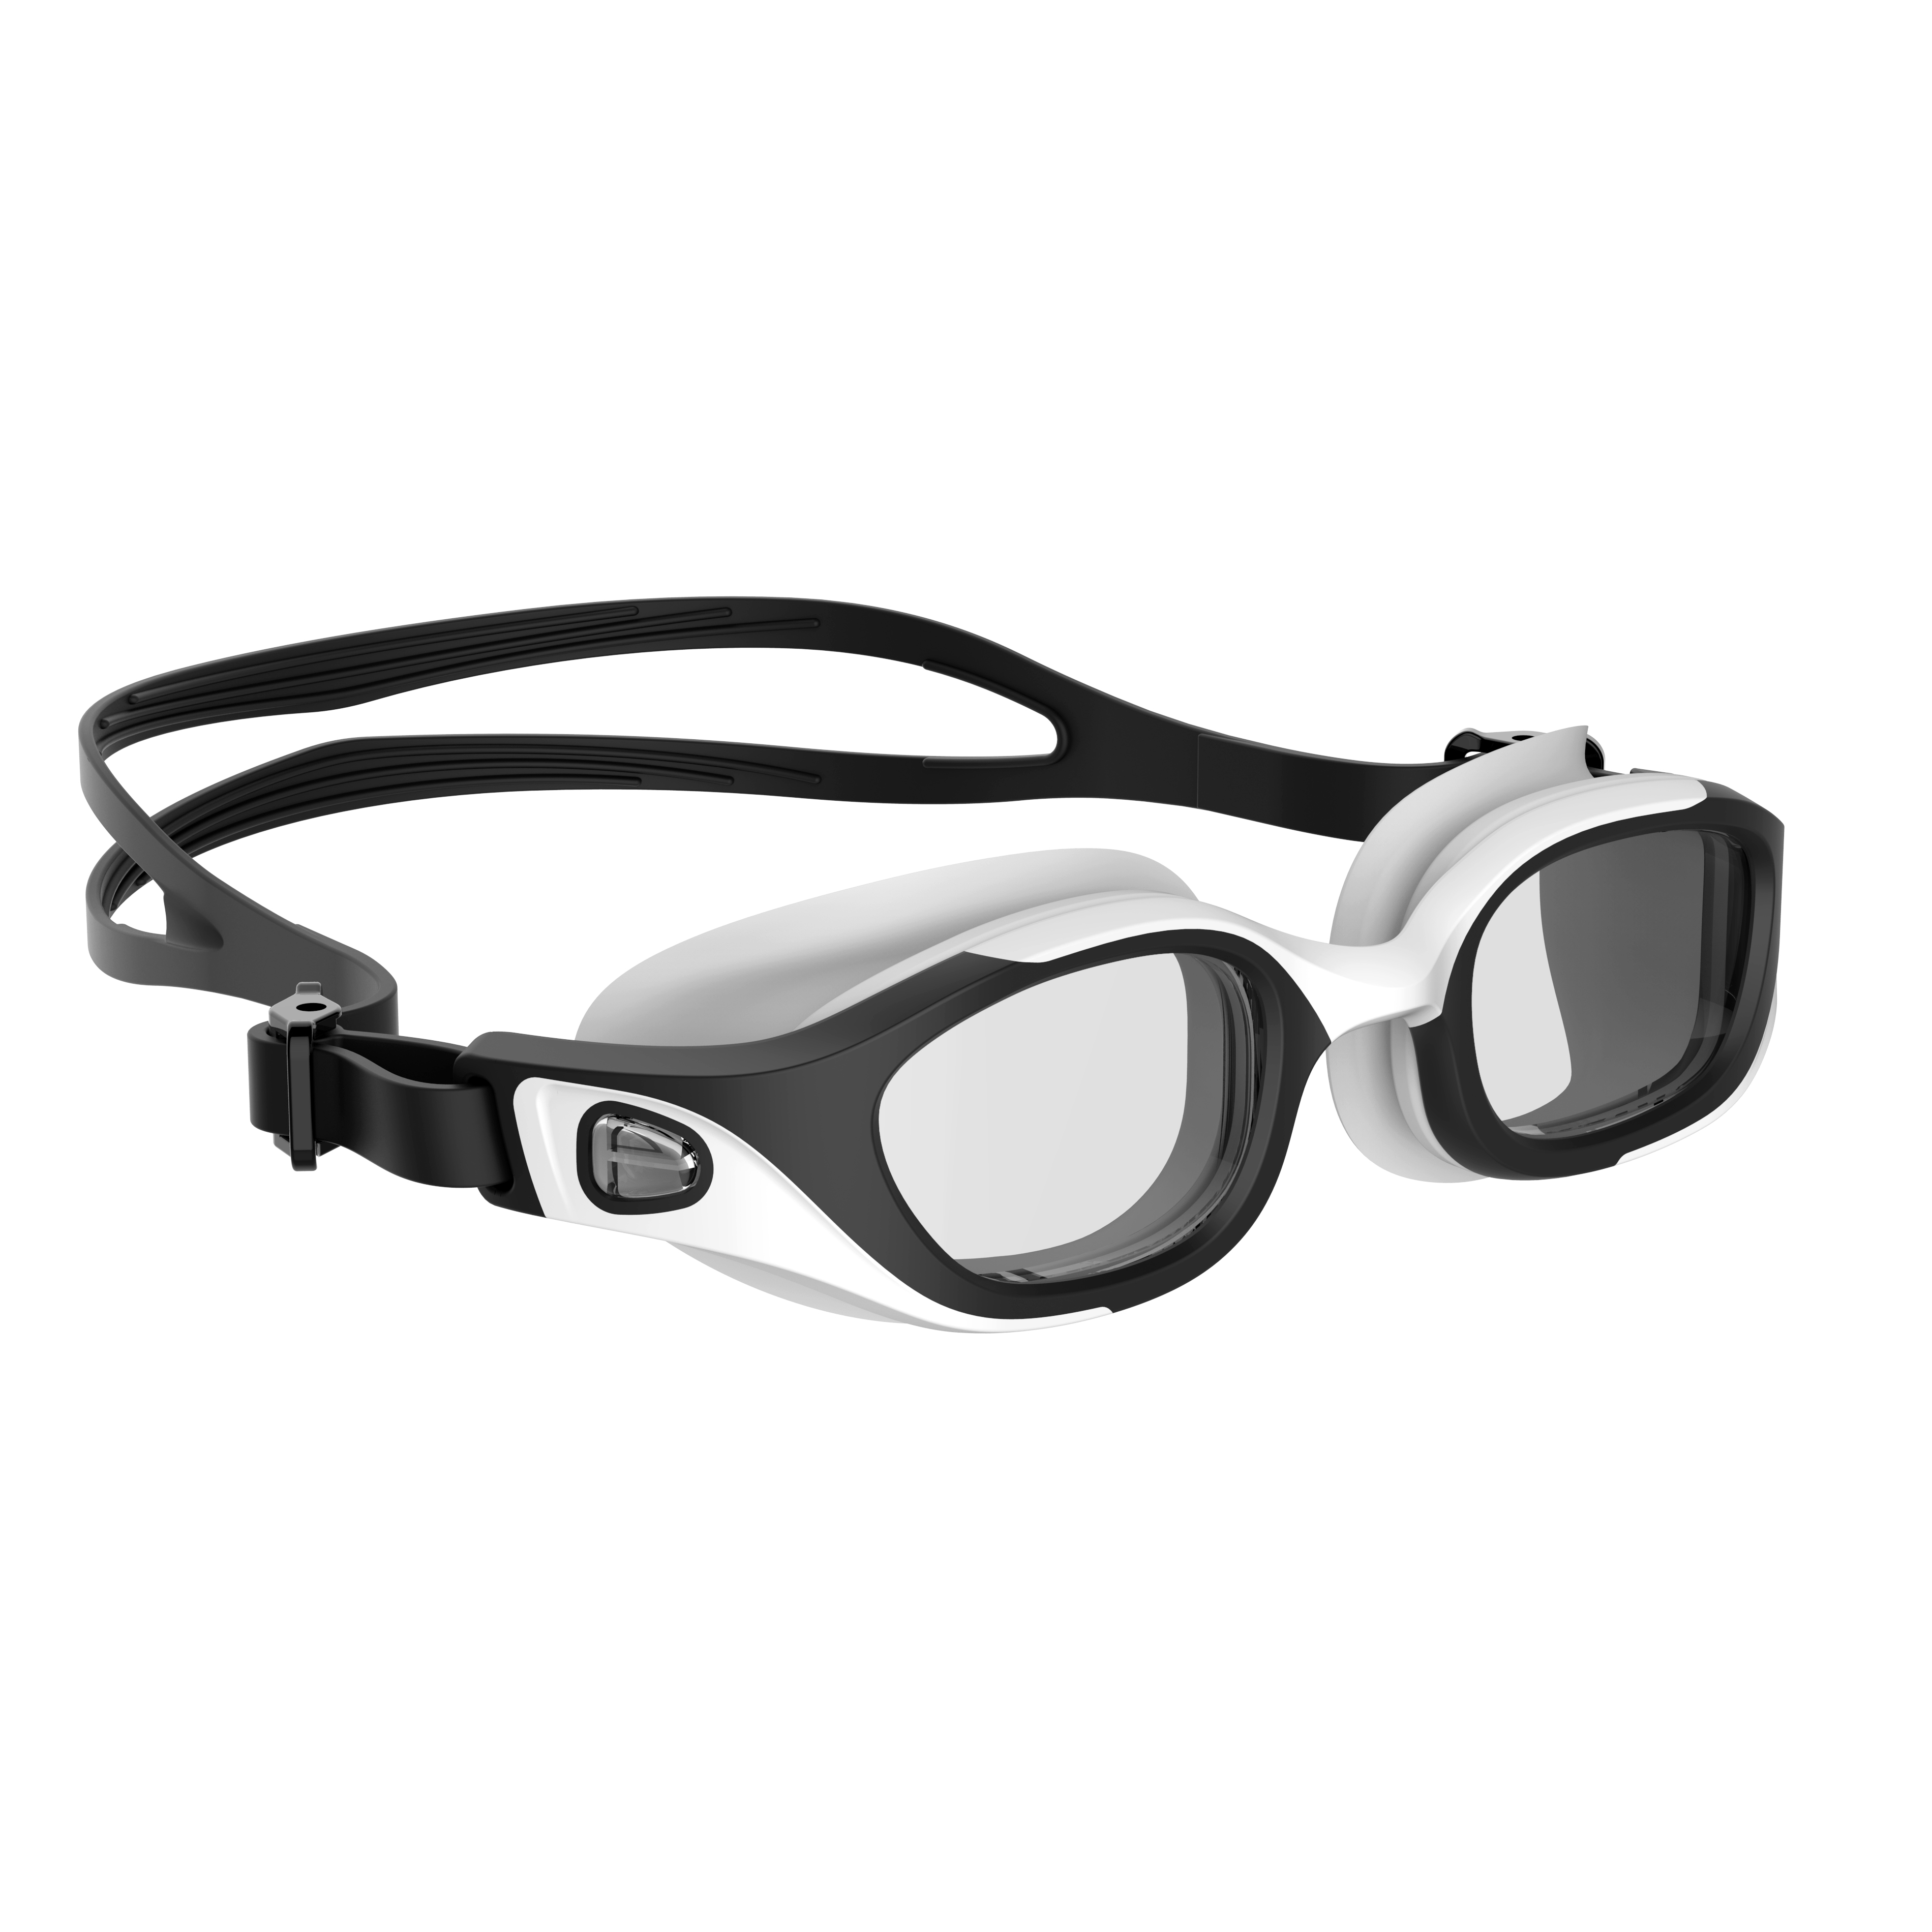 Swim goggles with Interchangeable Lenses